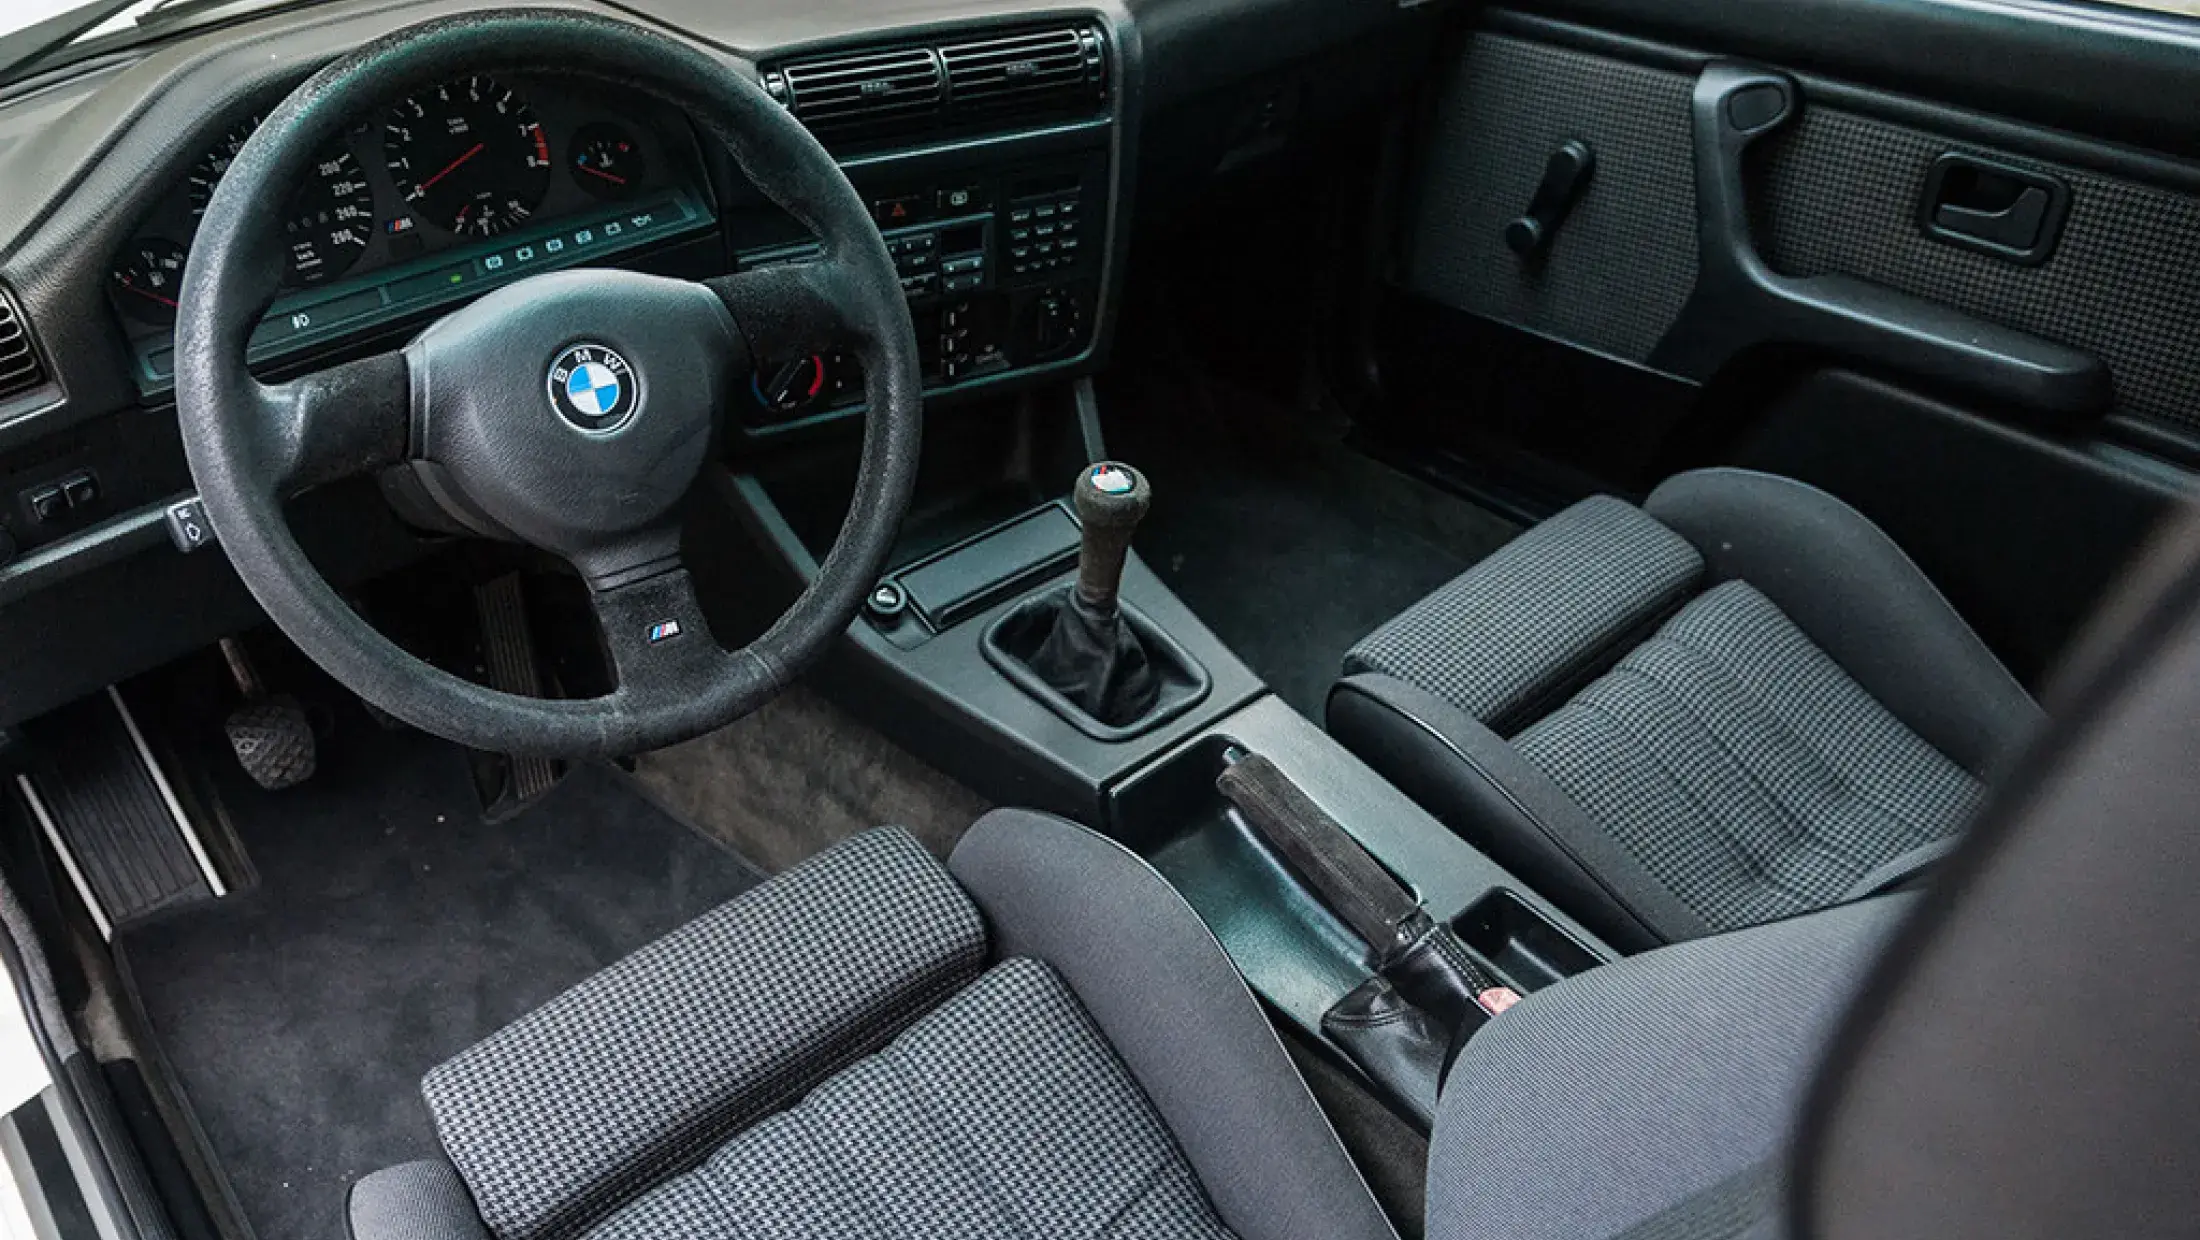 BMW M3 E30 Alpinweiss Bergwerff